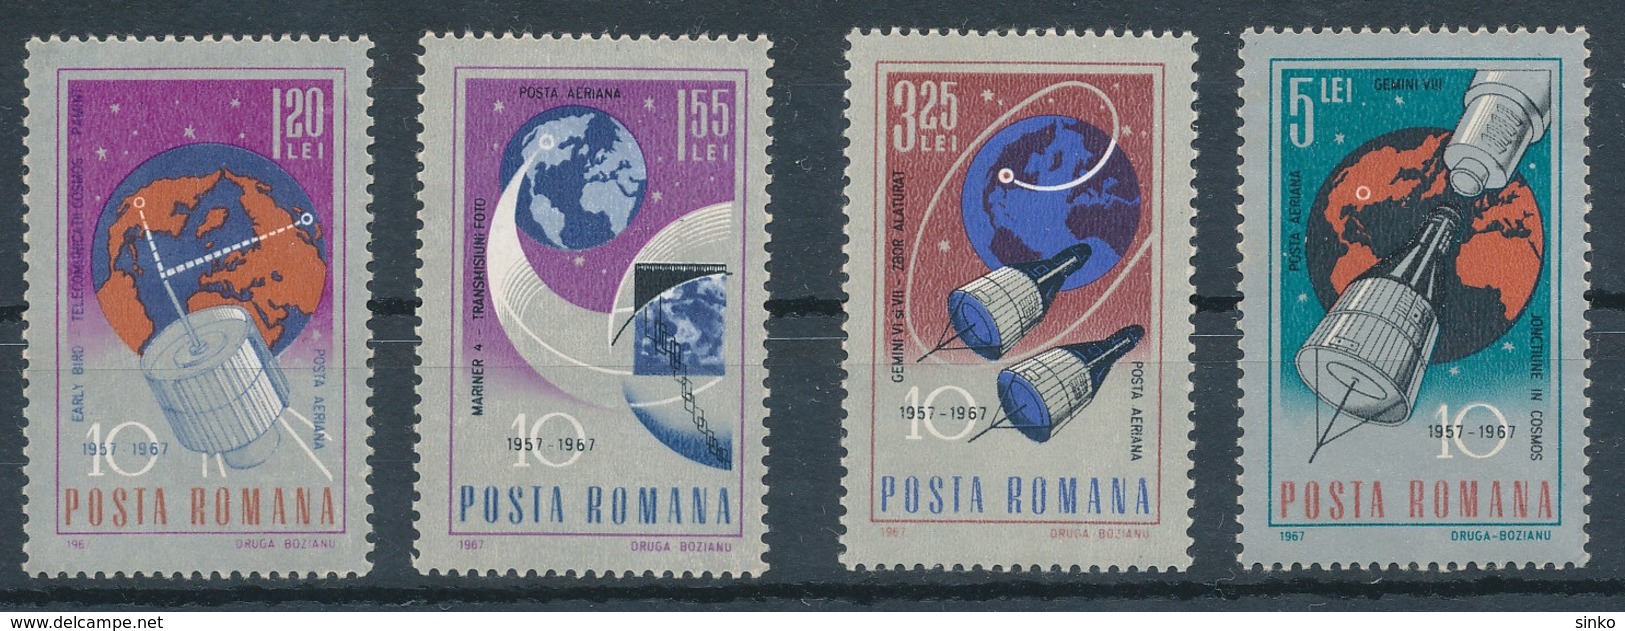 1967. Romania - Space Research - Europa